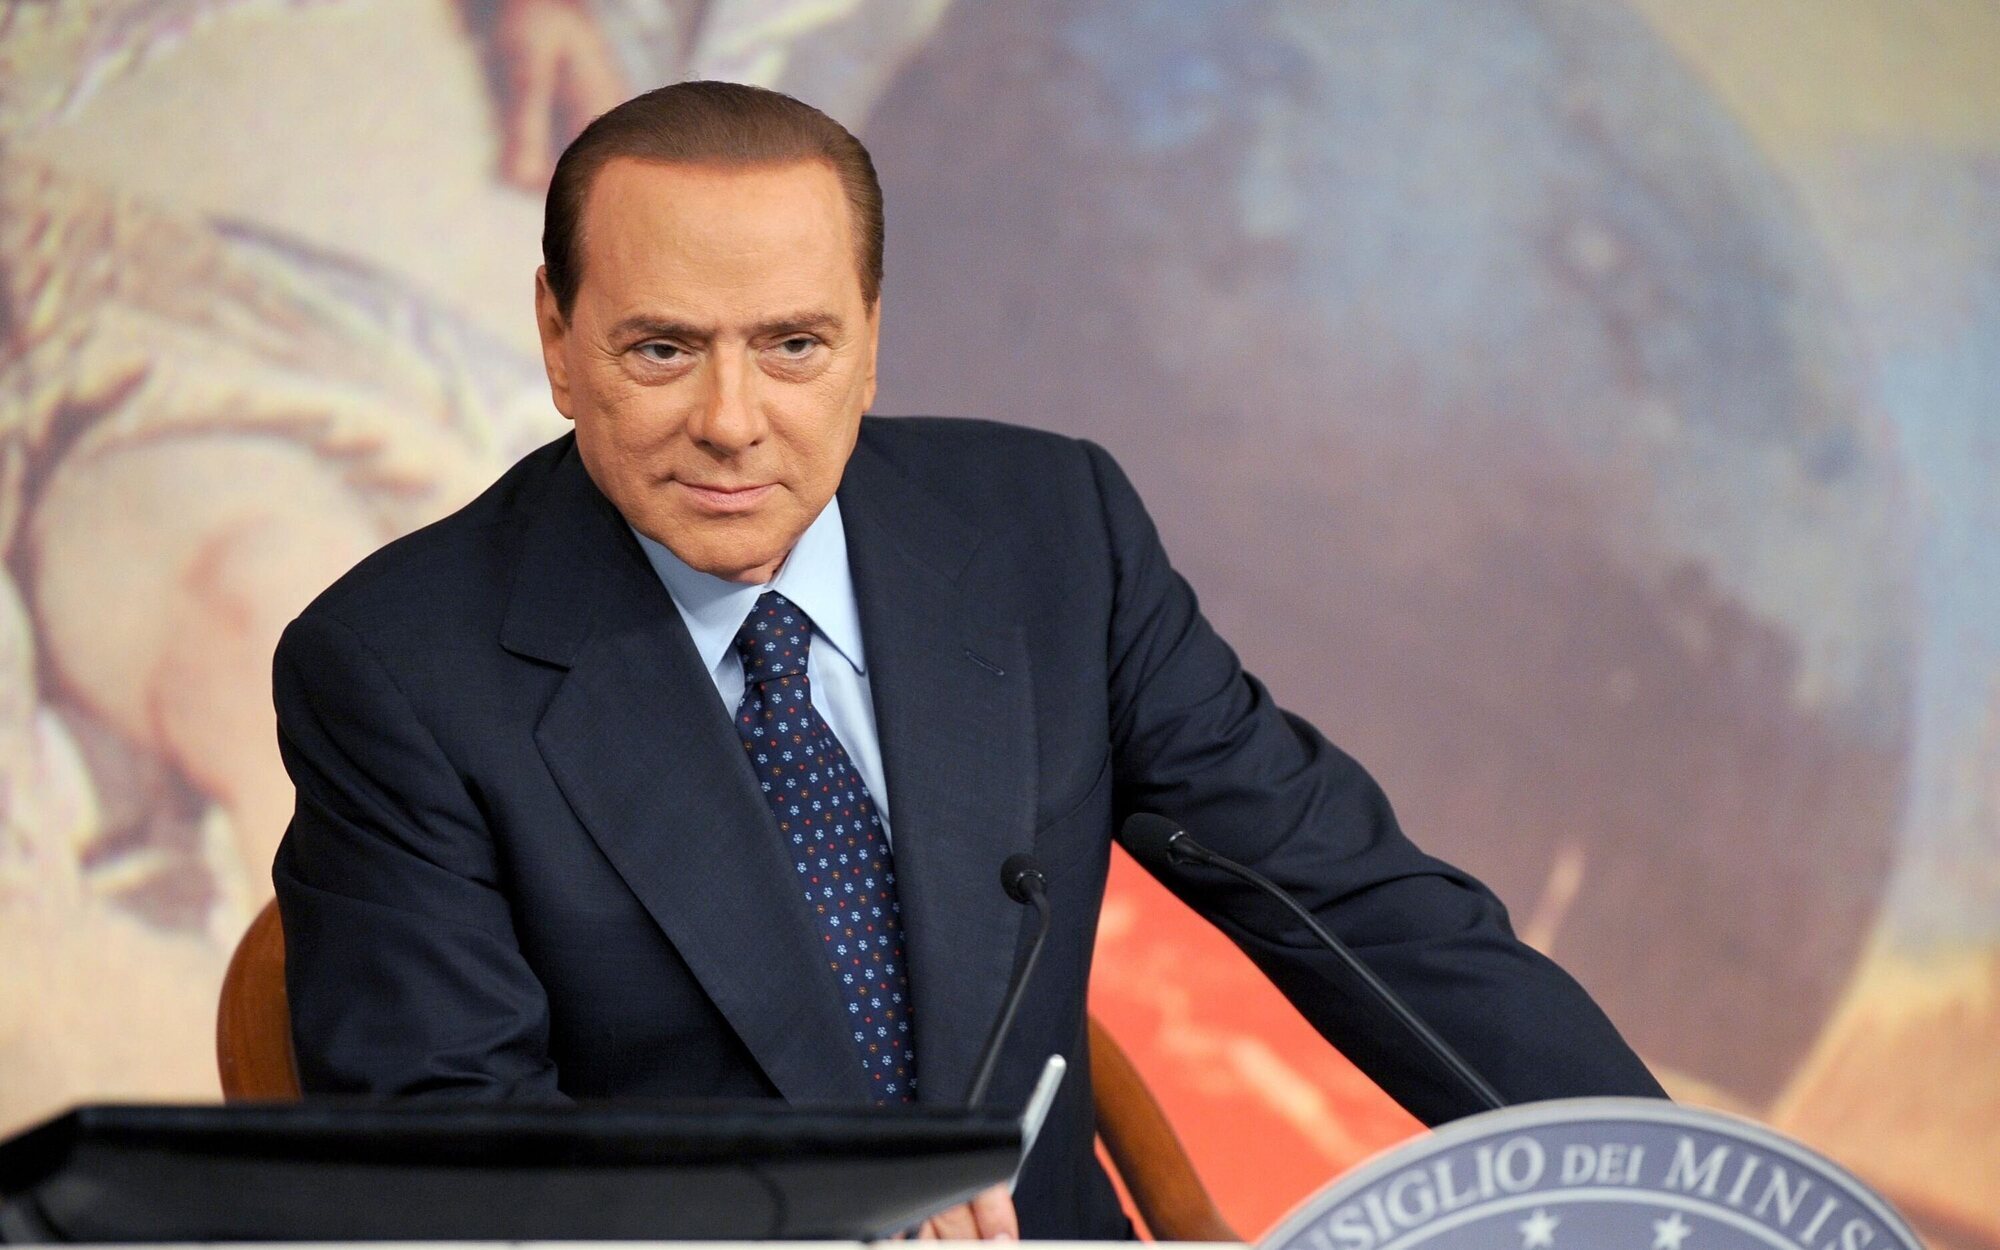 Silvio Berlusconi, fundador de Mediaset, hospitalizado al padecer leucemia
